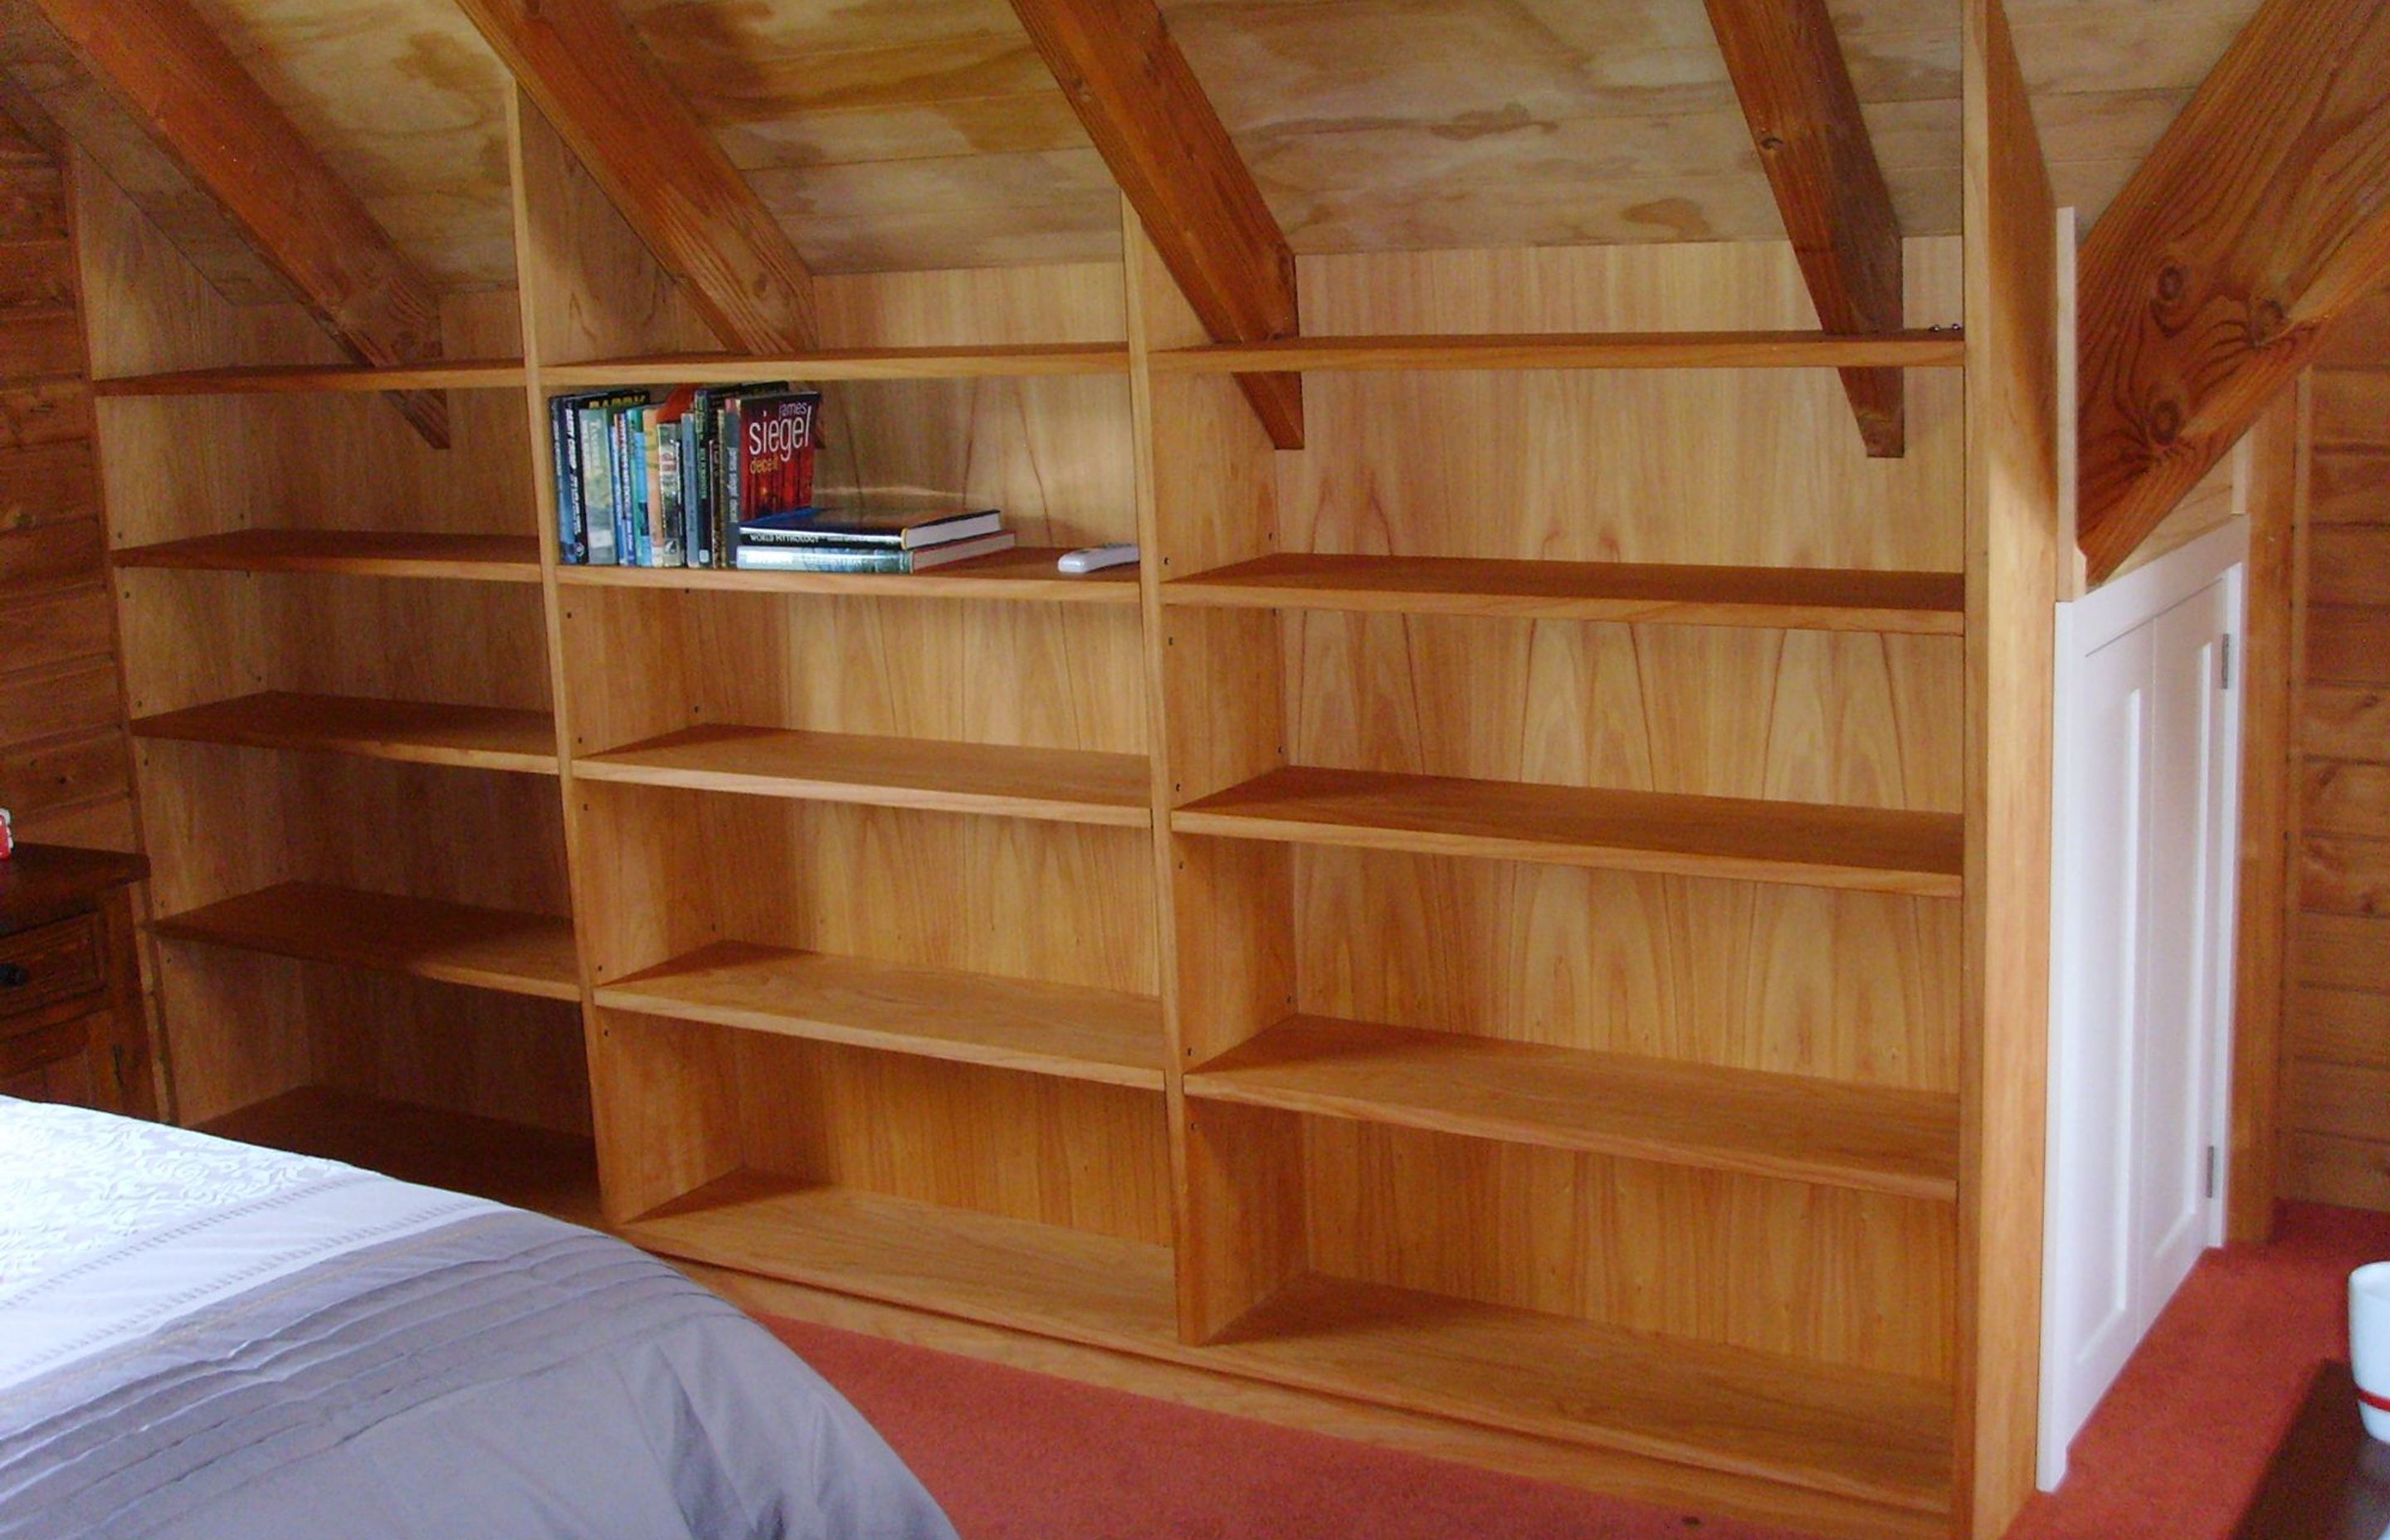 Built-in book shelves under roof eaves